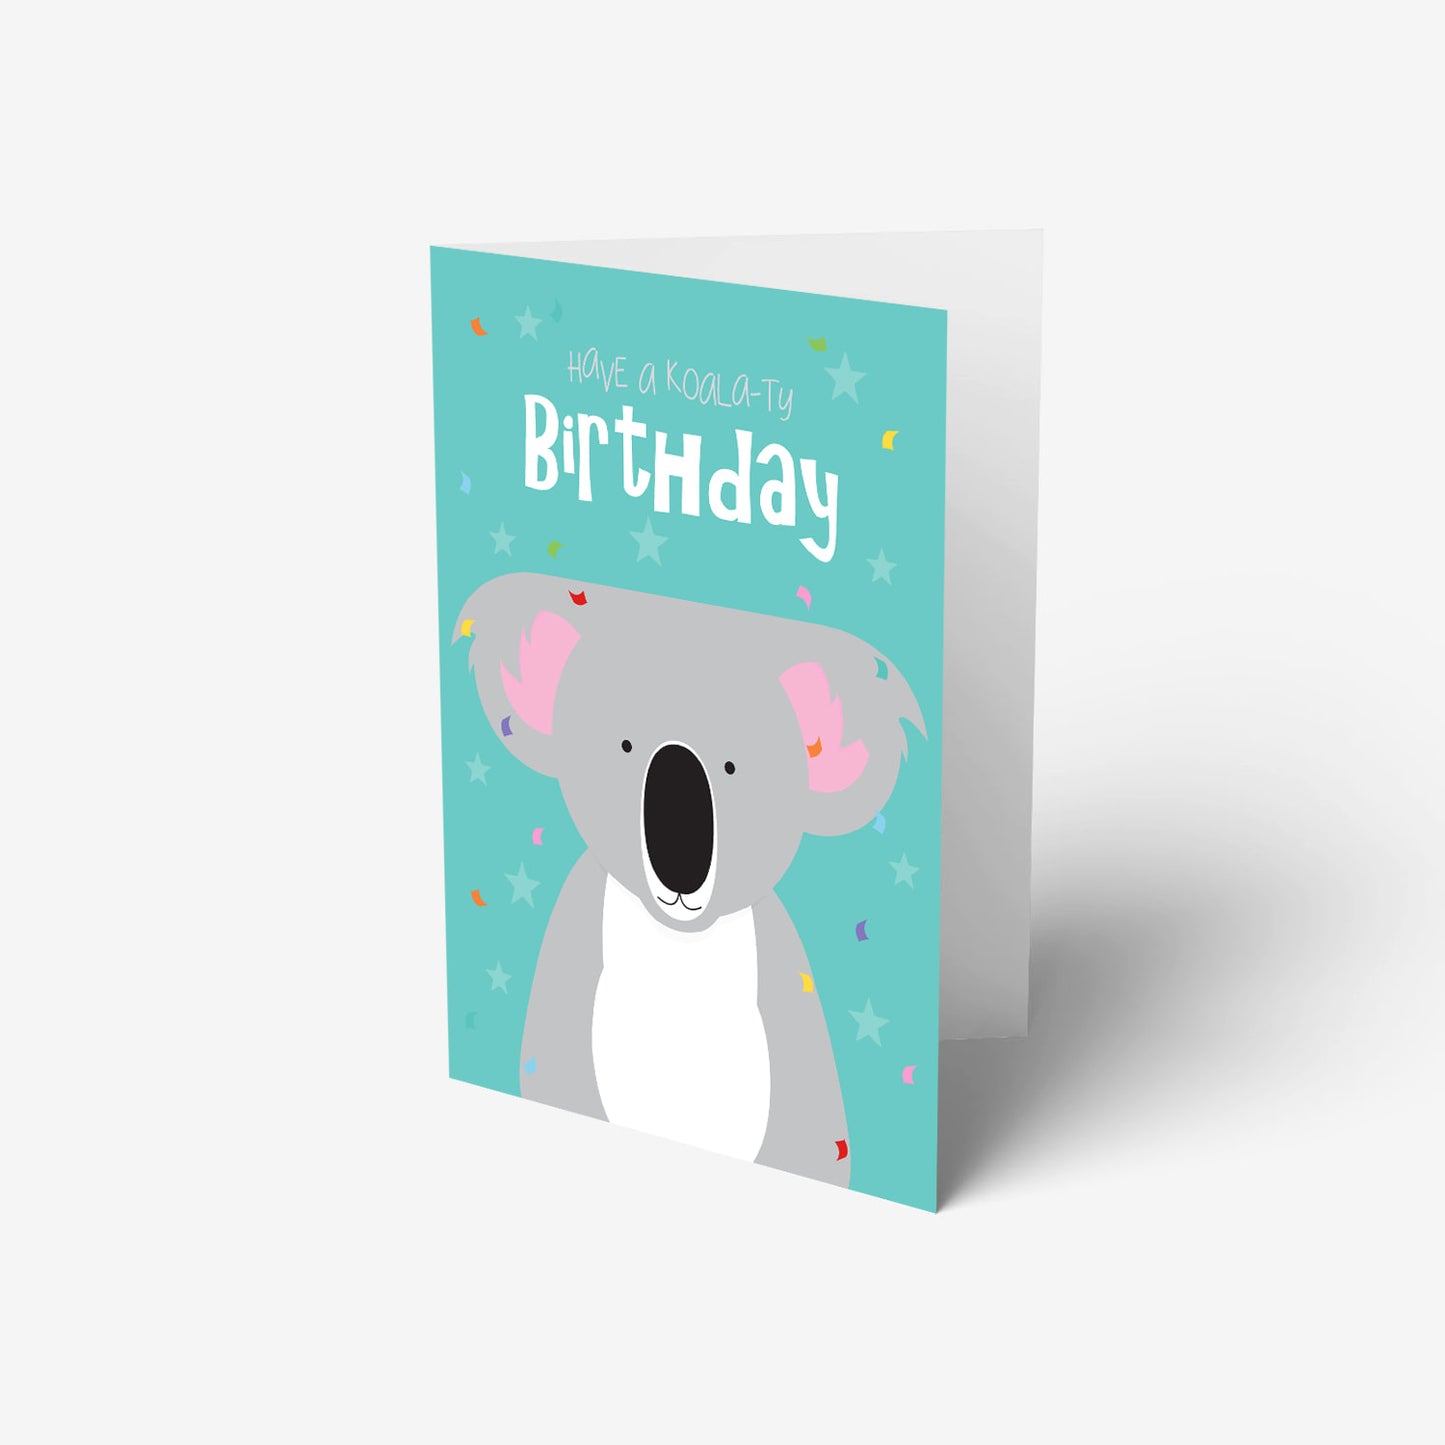 Koala-ty birthday card with koala illustration